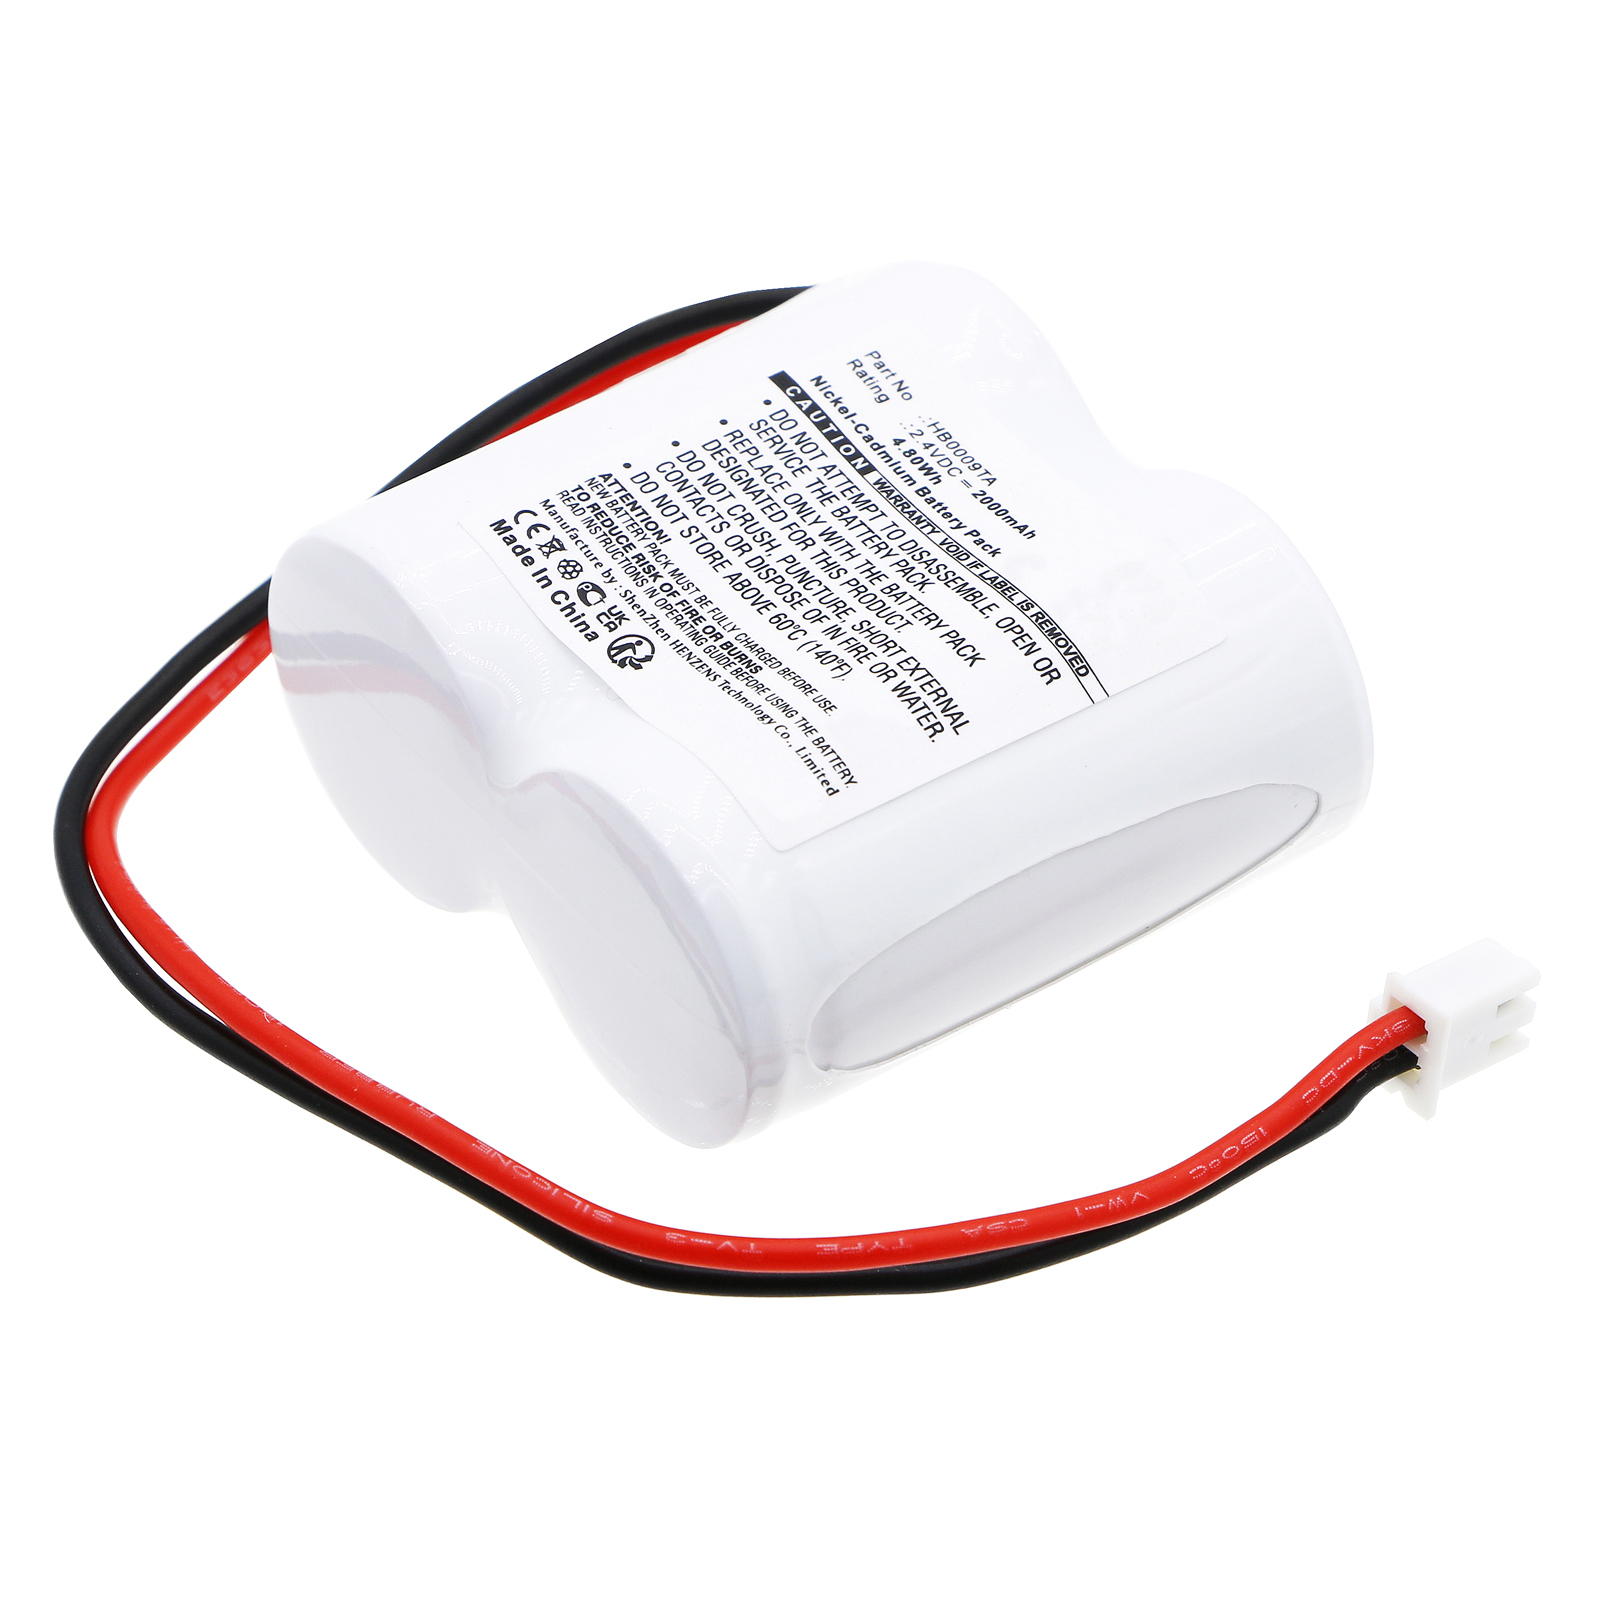 Synergy Digital Emergency Lighting Battery, Compatible with Legrand MGN0625 Emergency Lighting Battery (Ni-CD, 2.4V, 2000mAh)